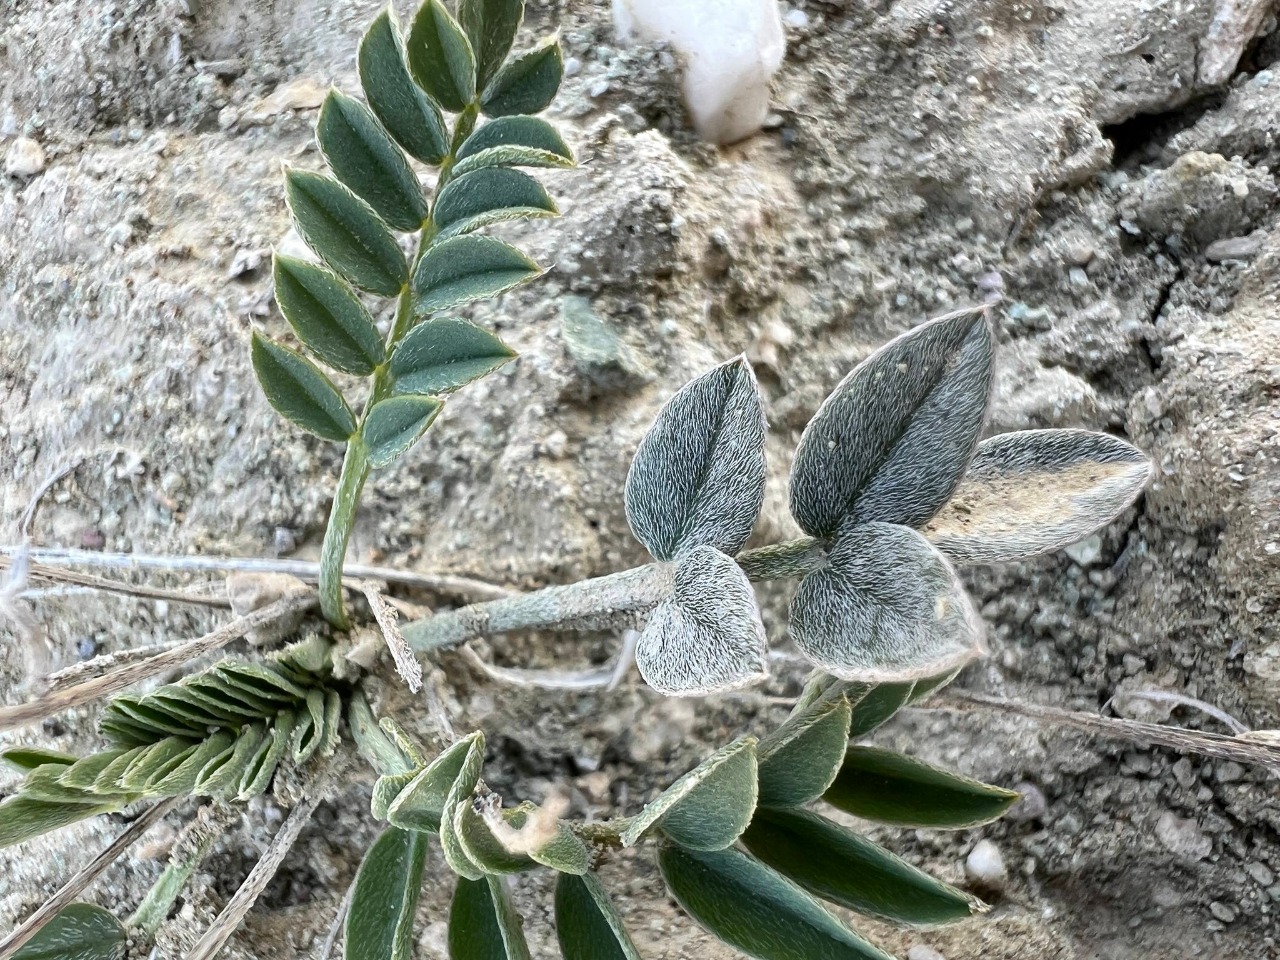 Astragalus elongatus